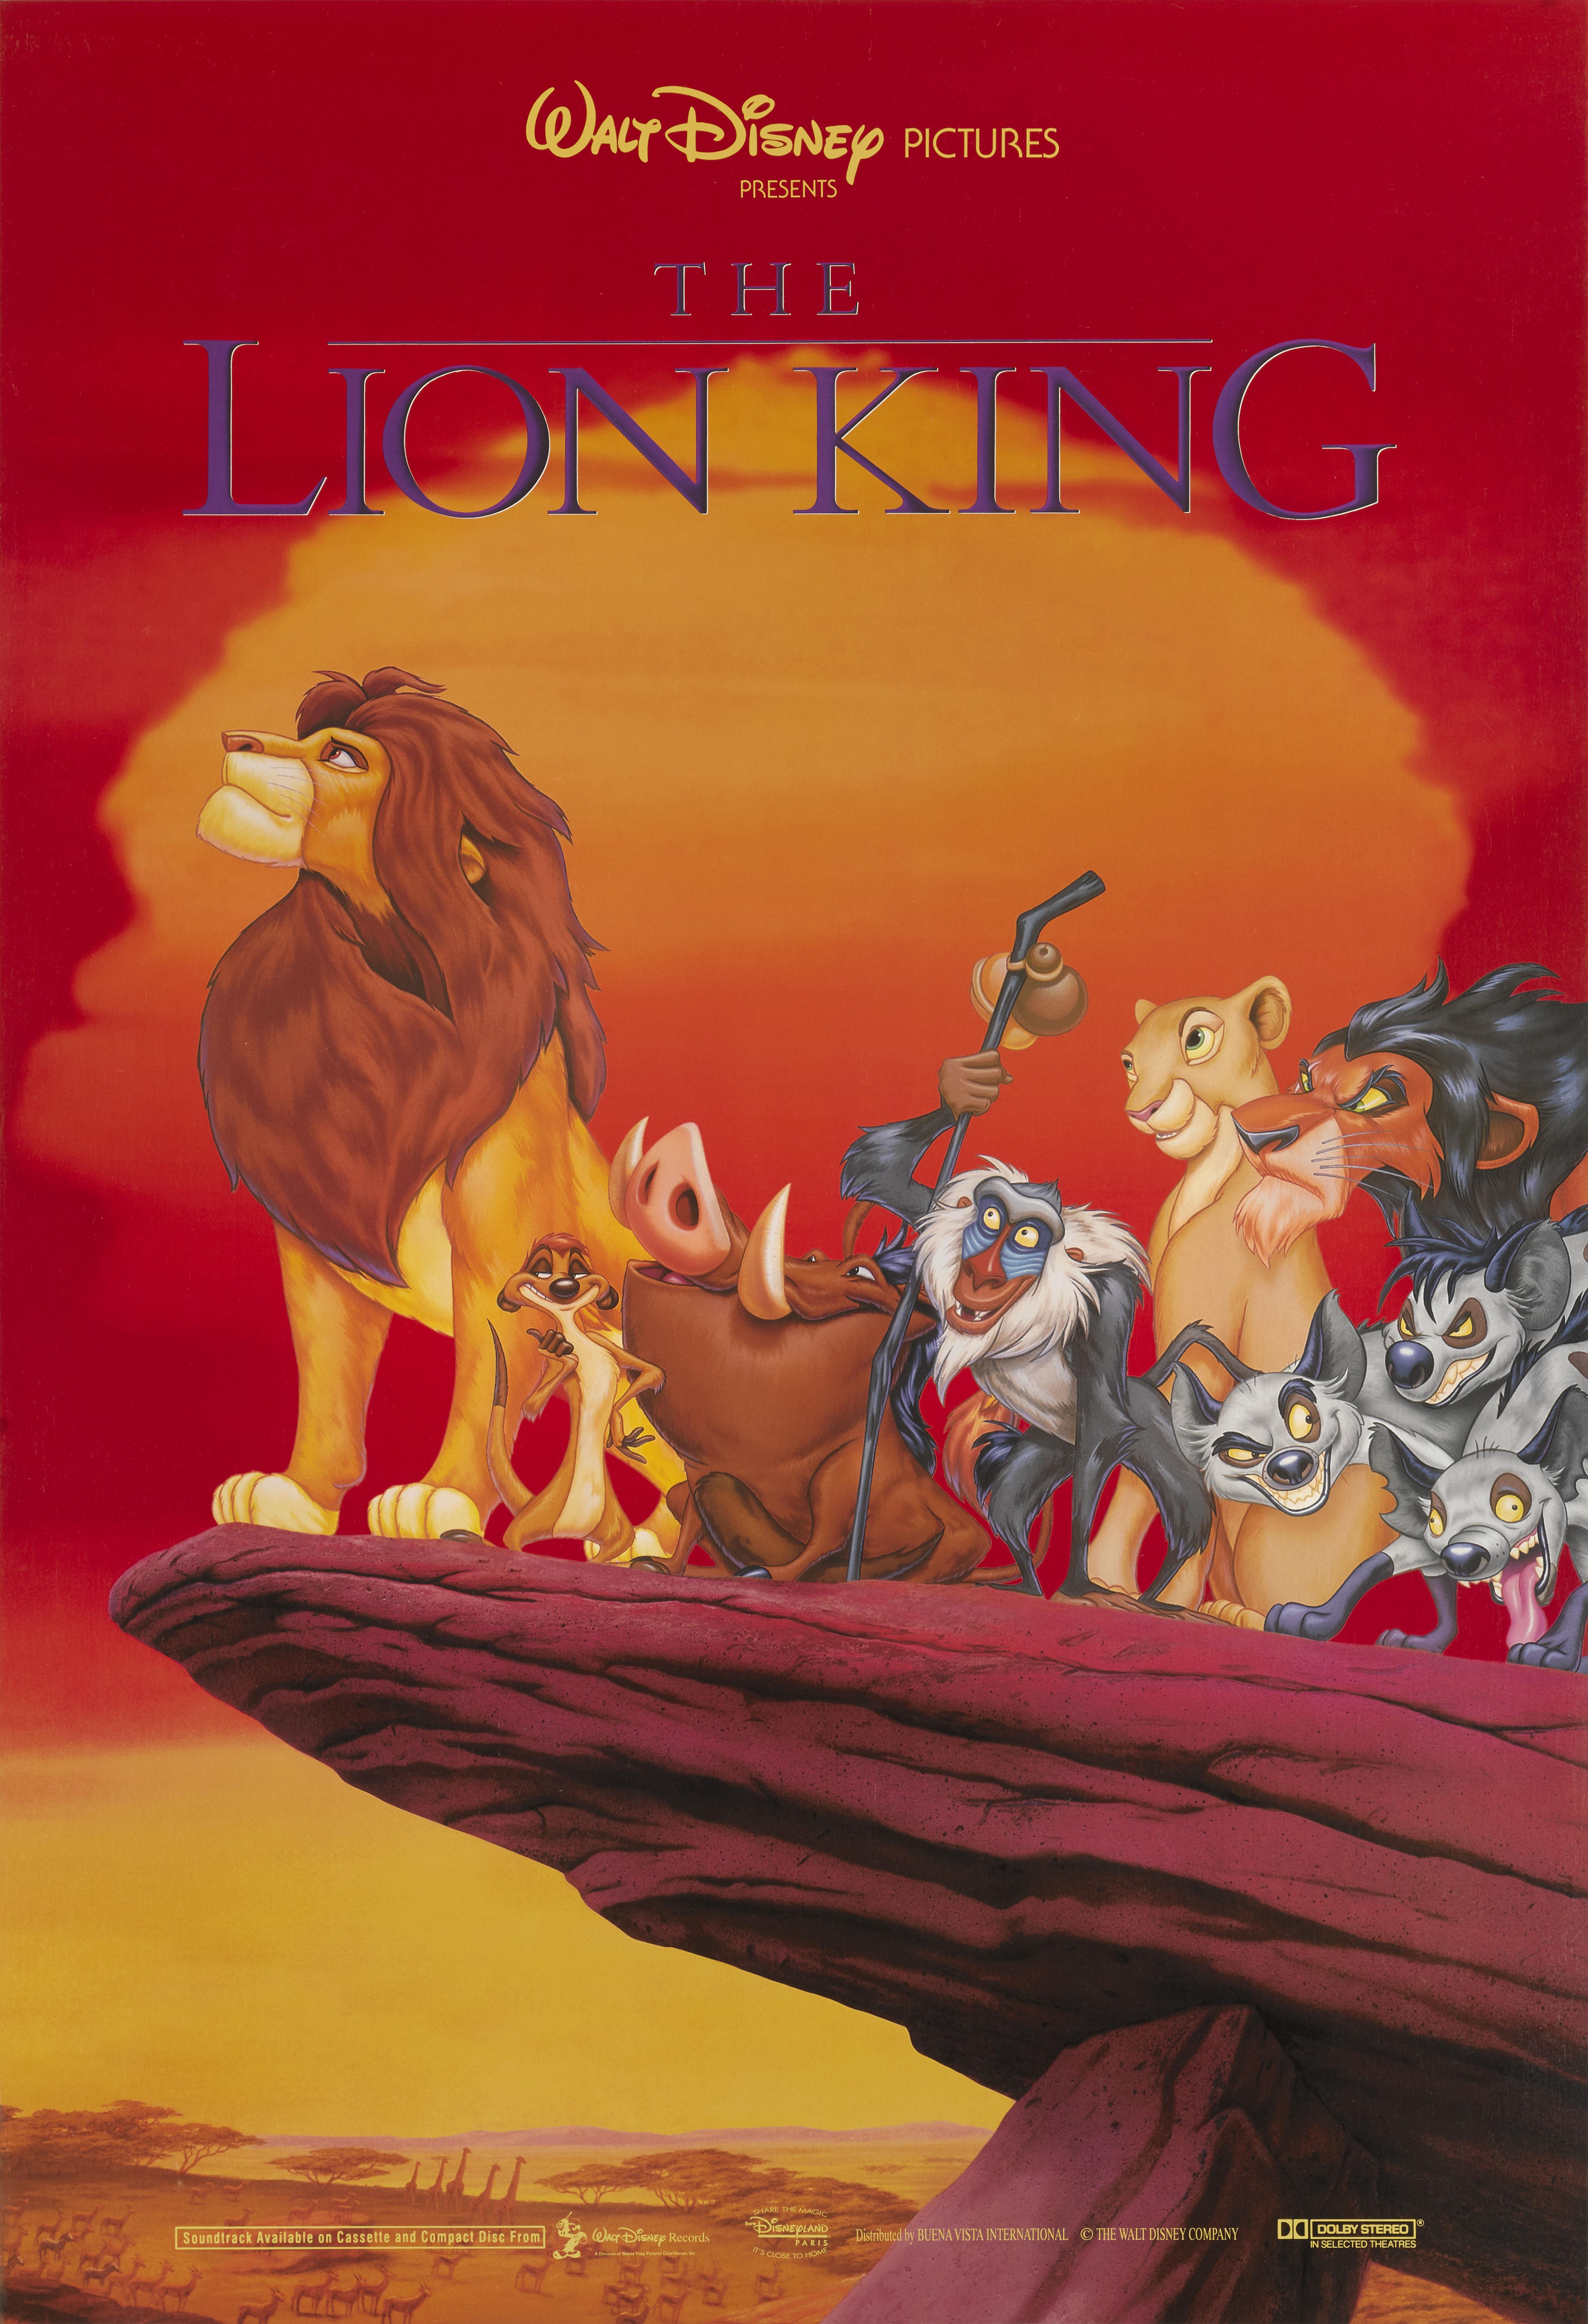 walt disney pictures presents the lion king